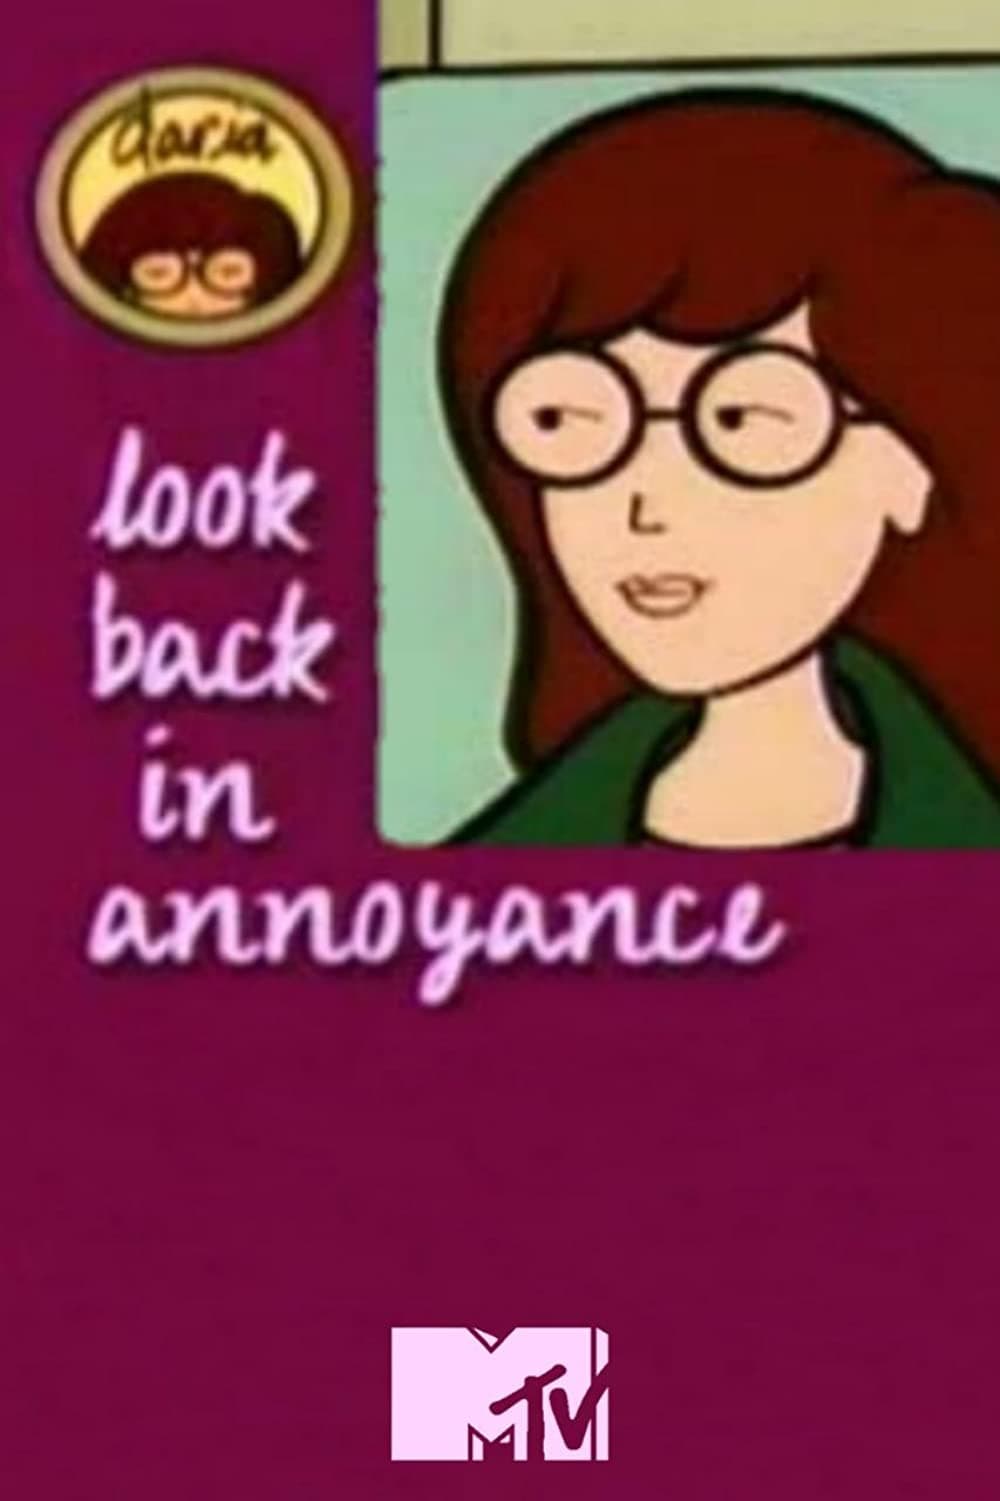 Daria: Look Back in Annoyance